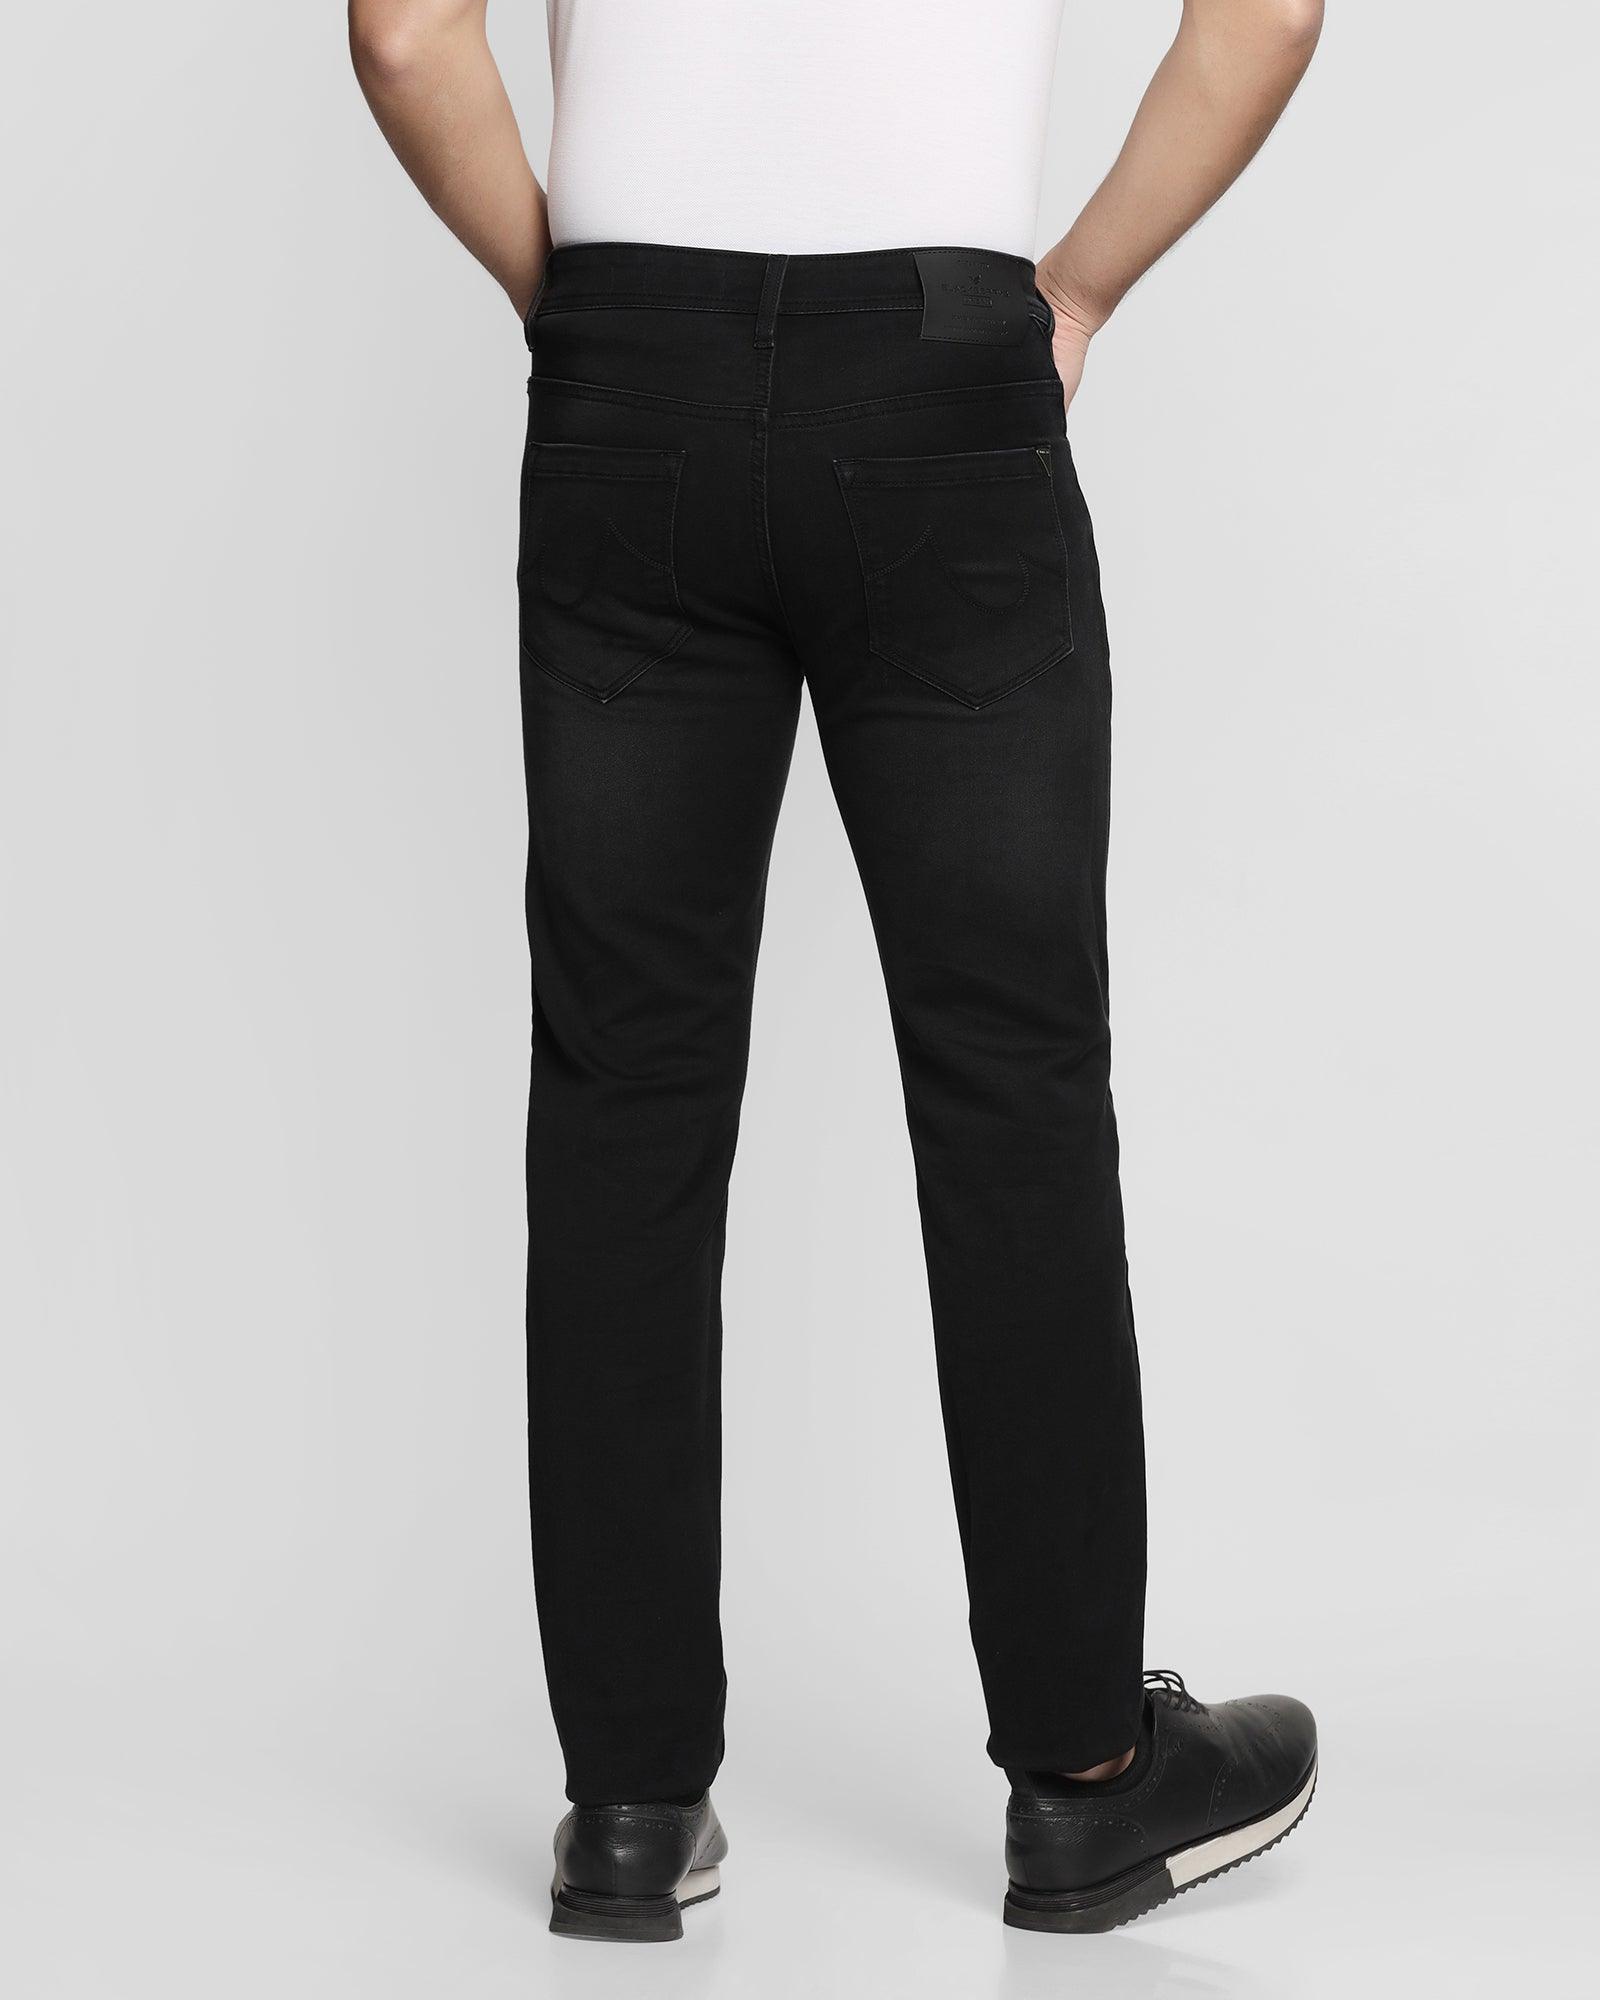 Ultrasoft Slim Comfort Buff Fit Black Jeans - Rory